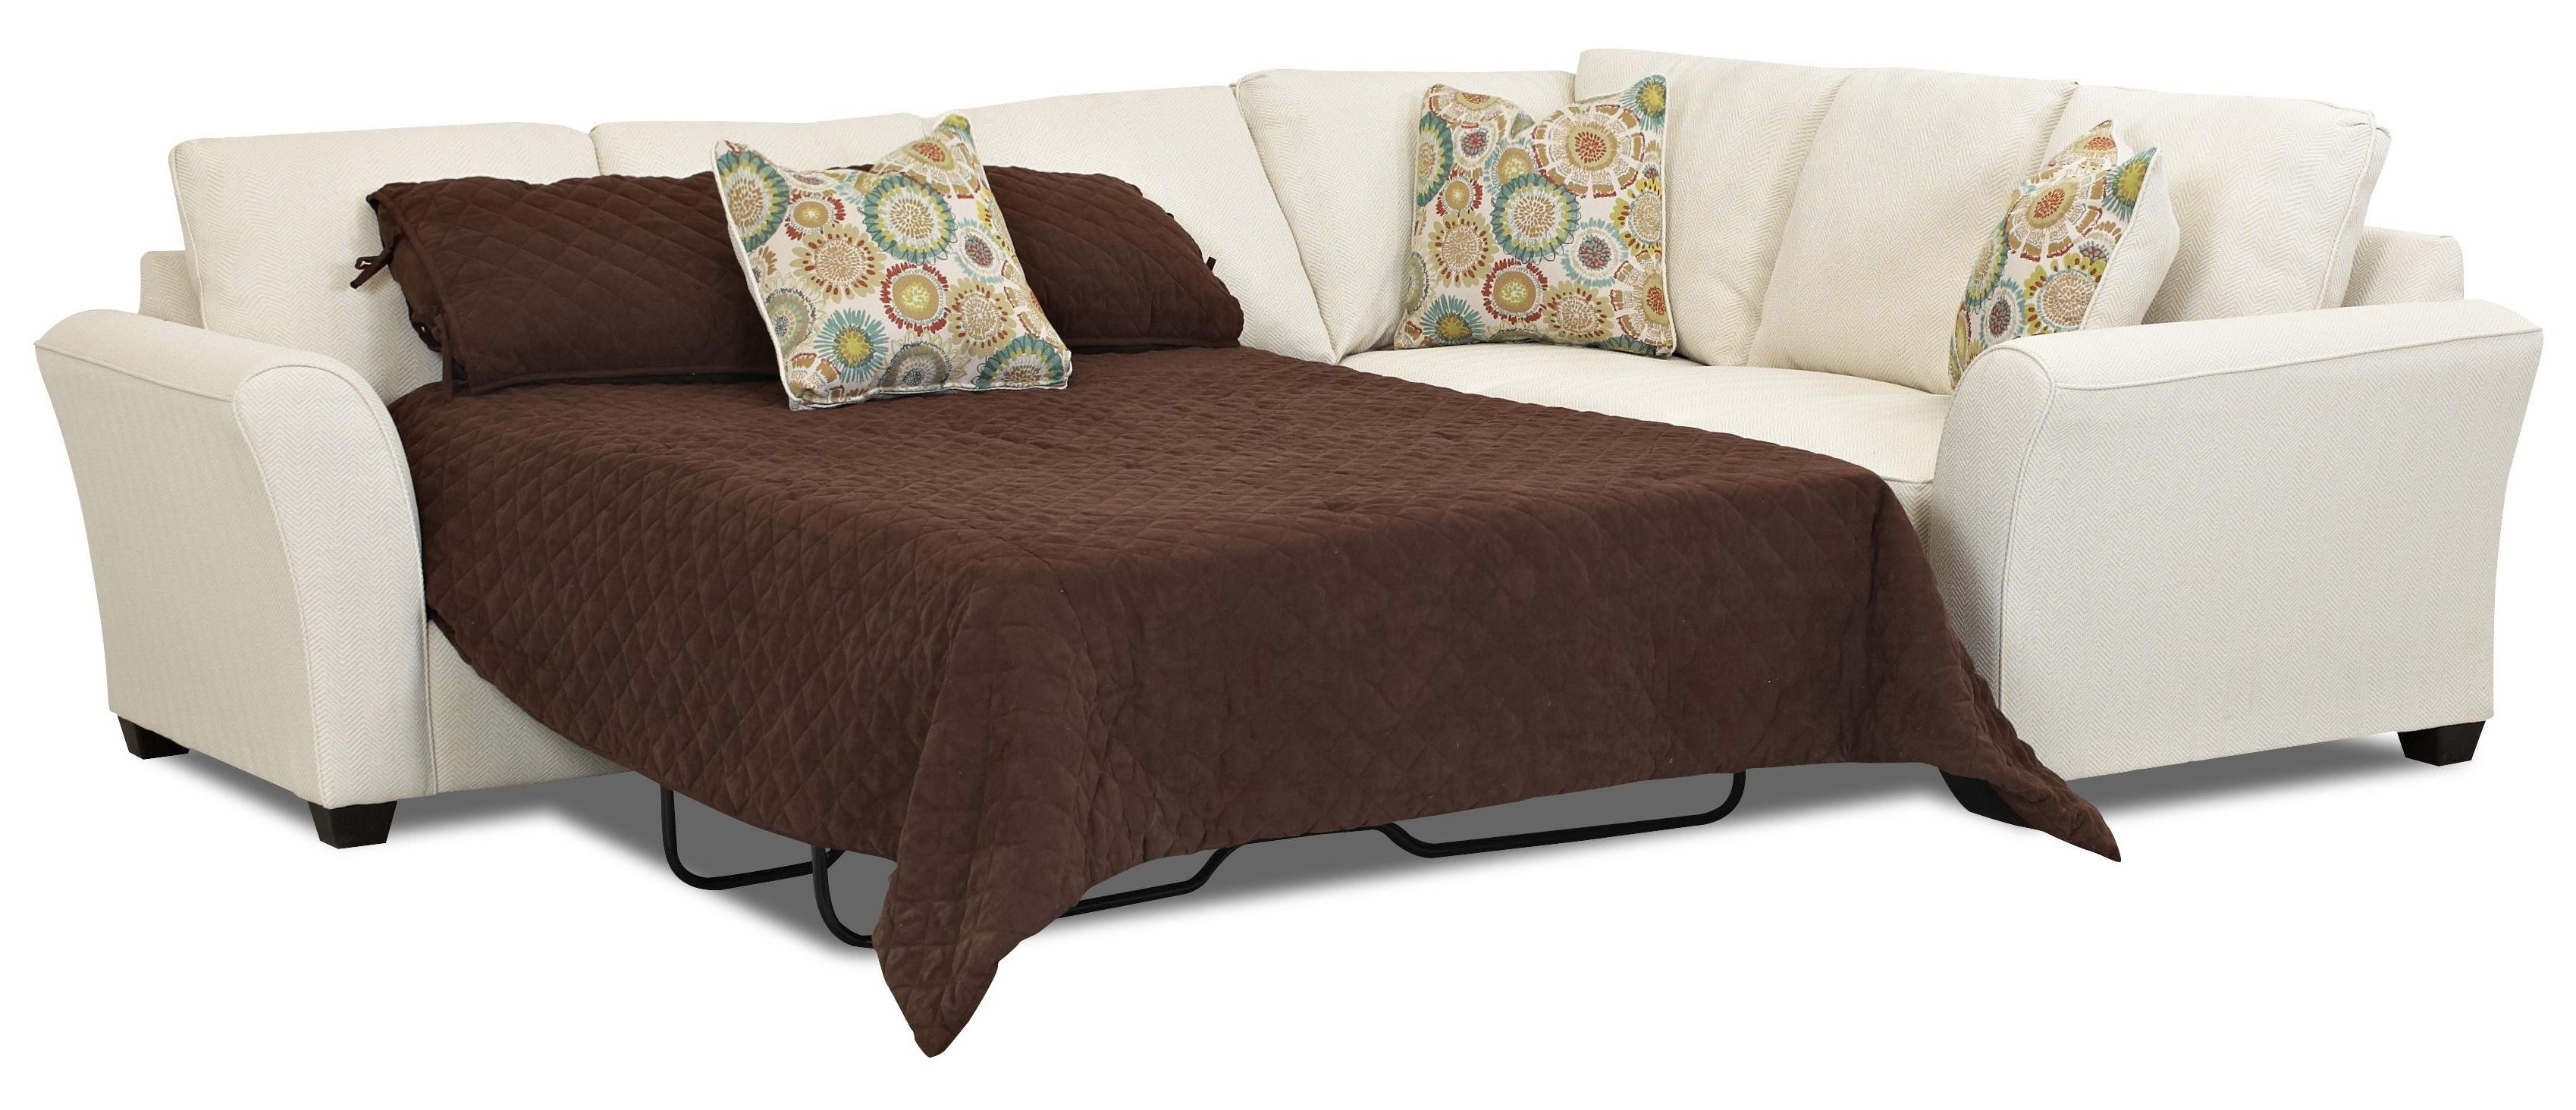 New Queen Sleeper Sectional Sofa – Buildsimplehome With Famous Sleeper Sectional Sofas (View 12 of 20)